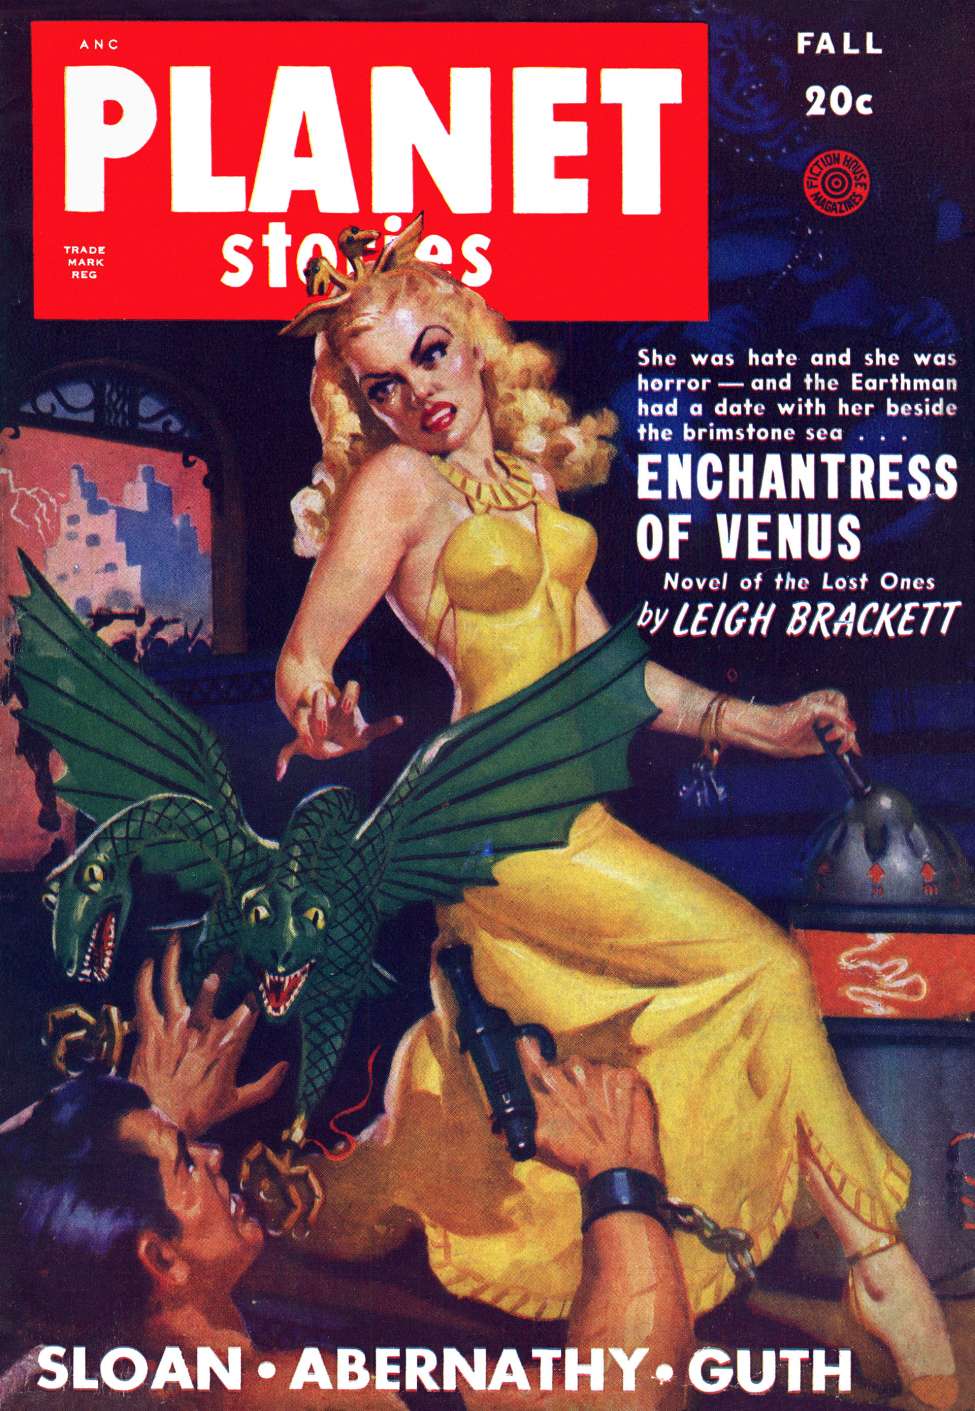 Comic Book Cover For Planet Stories v4 4 - Enchantress of Venus - Leigh Brackett